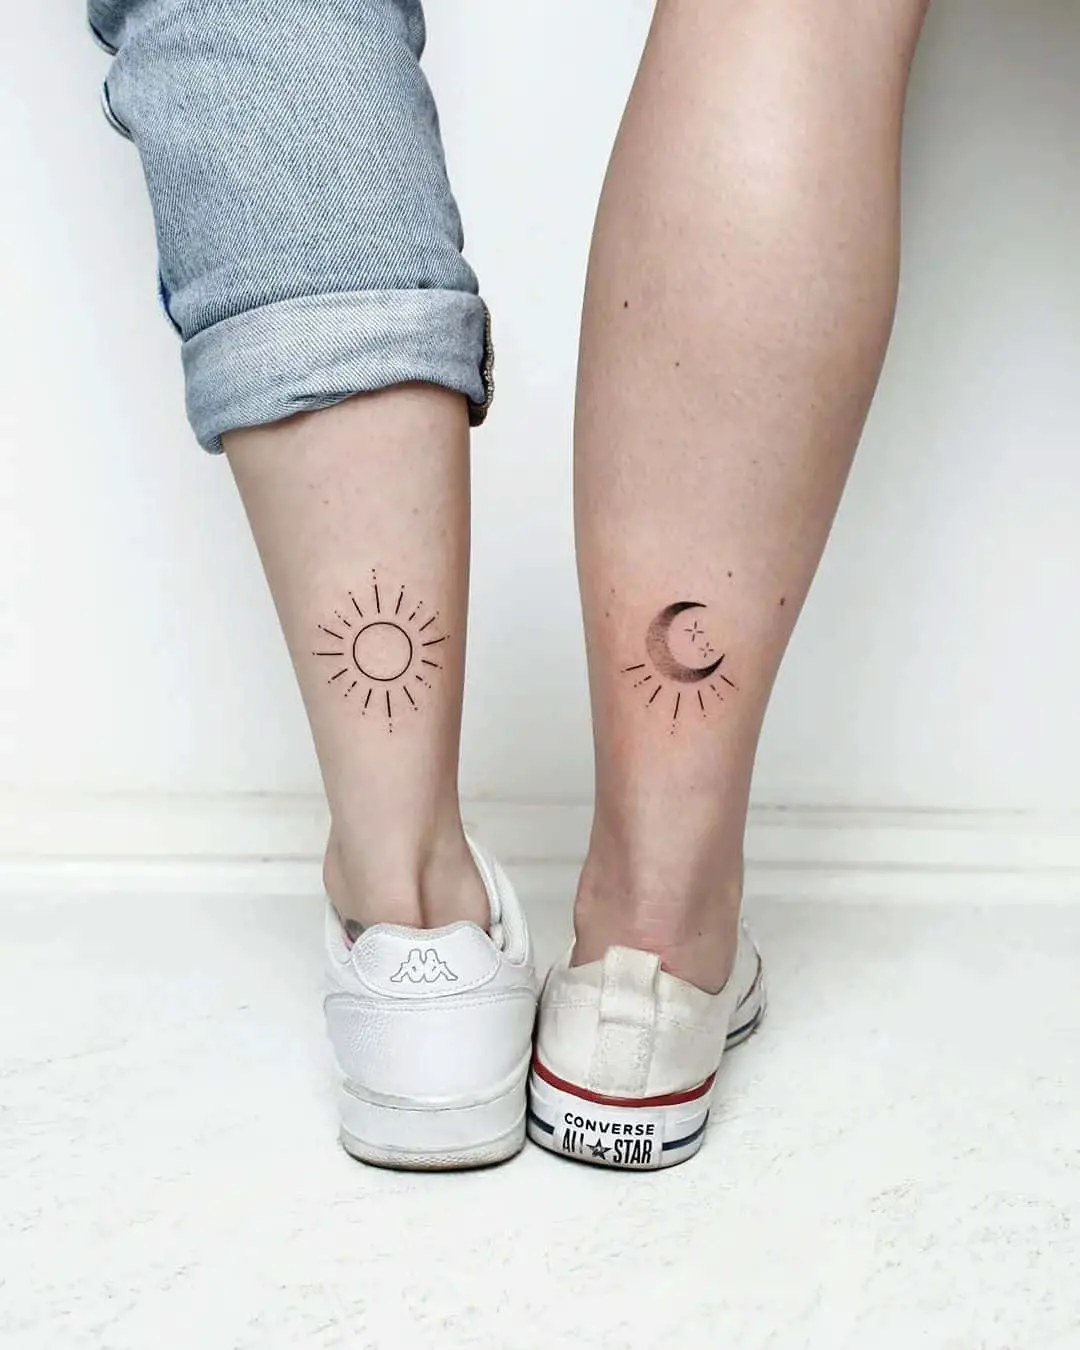 Sun and moon tattoo on lower leg